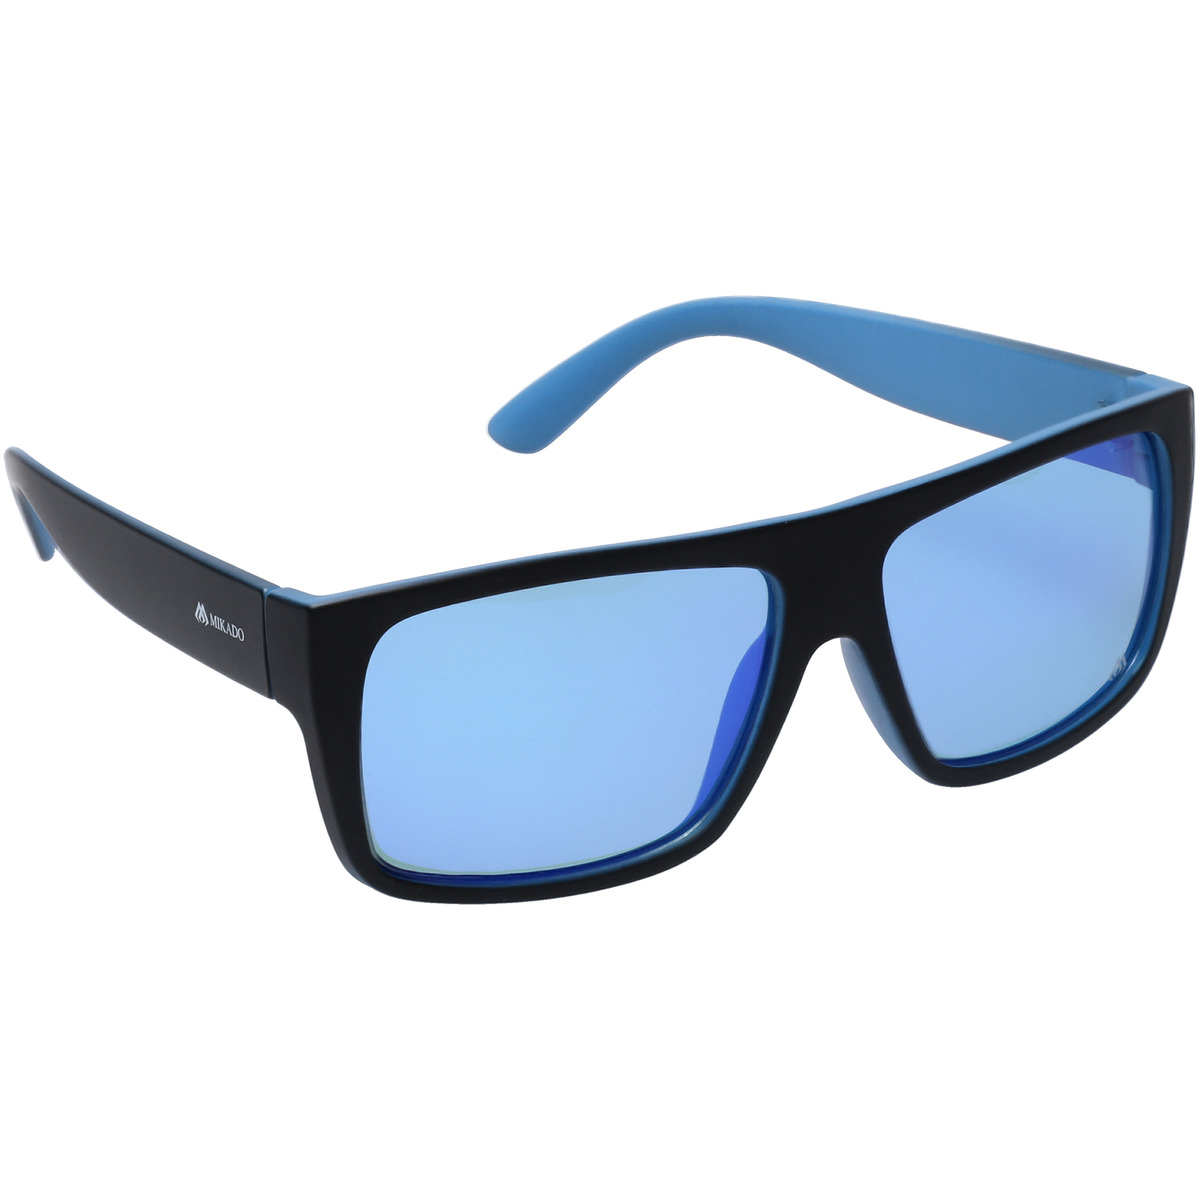 Mikado Sunglasses Polarized - 595 GREY MIRROR EFFECT